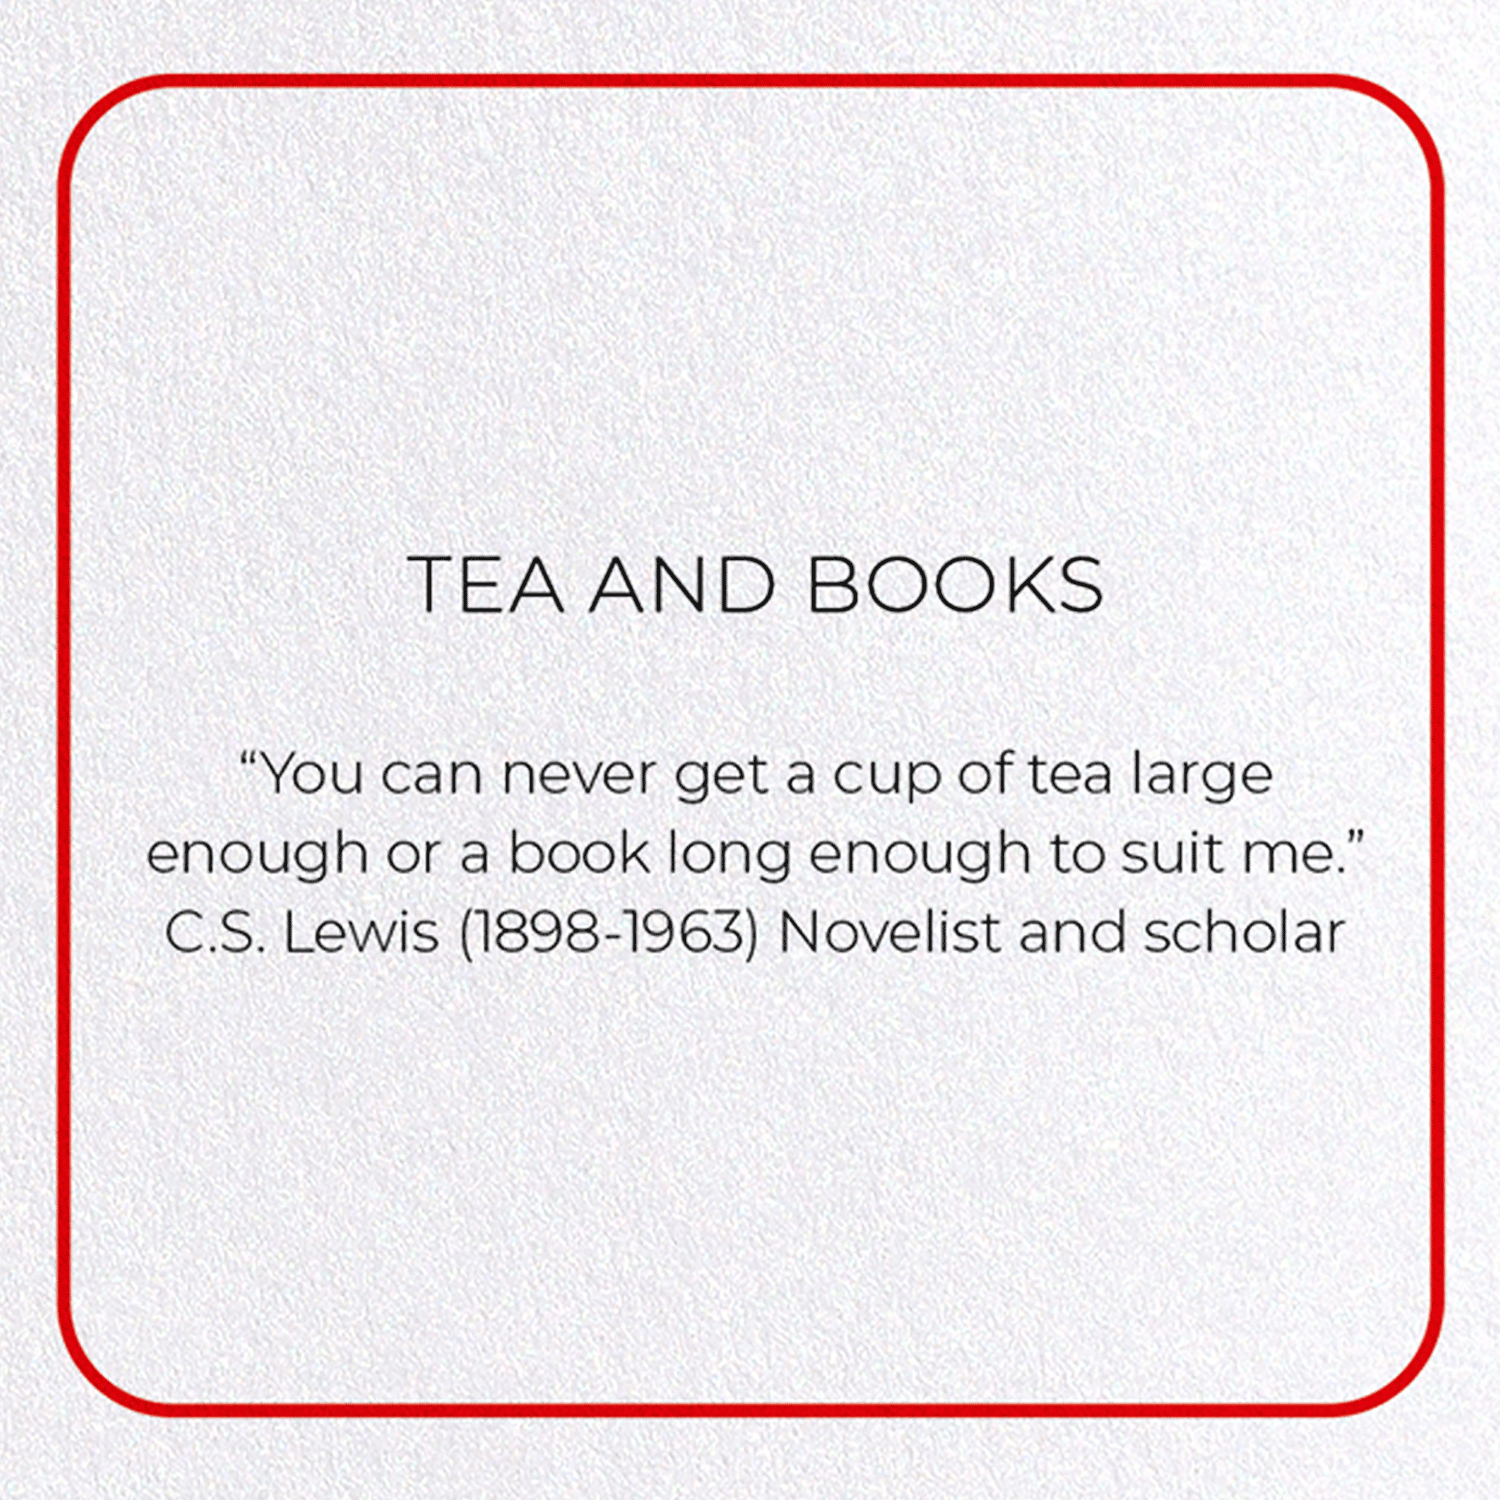 TEA AND BOOKS: Photo Greeting Card